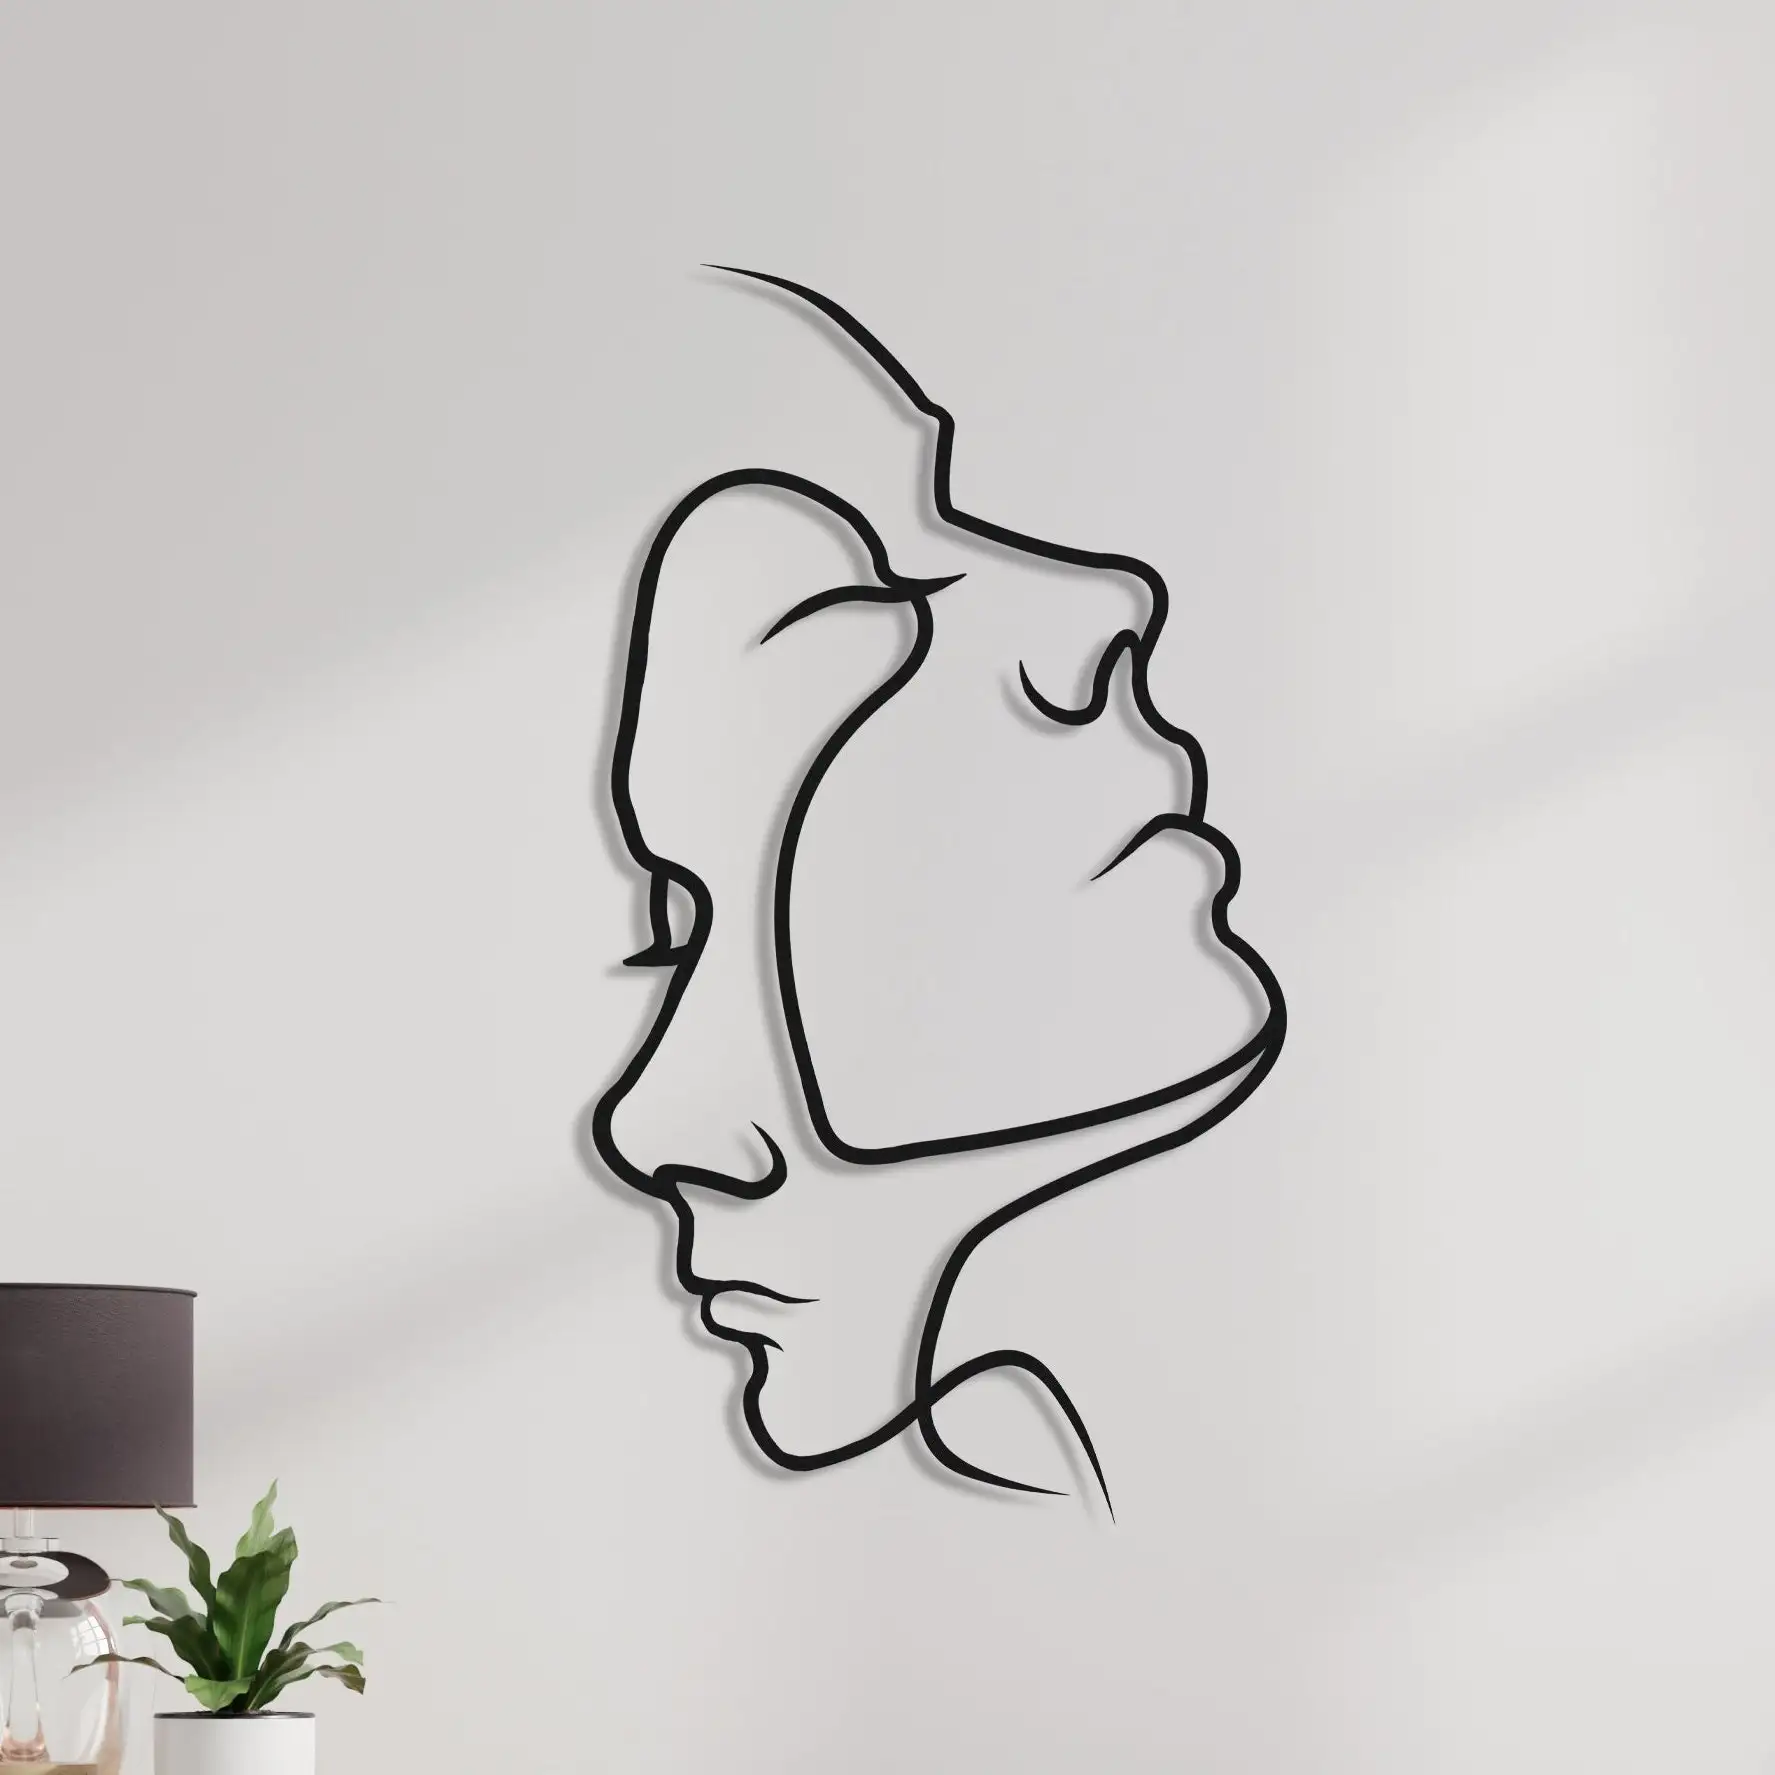 Minimalist Line Wall Art, 2 Faces Geometric  Metal Wall Art Decor for Interior Decoration